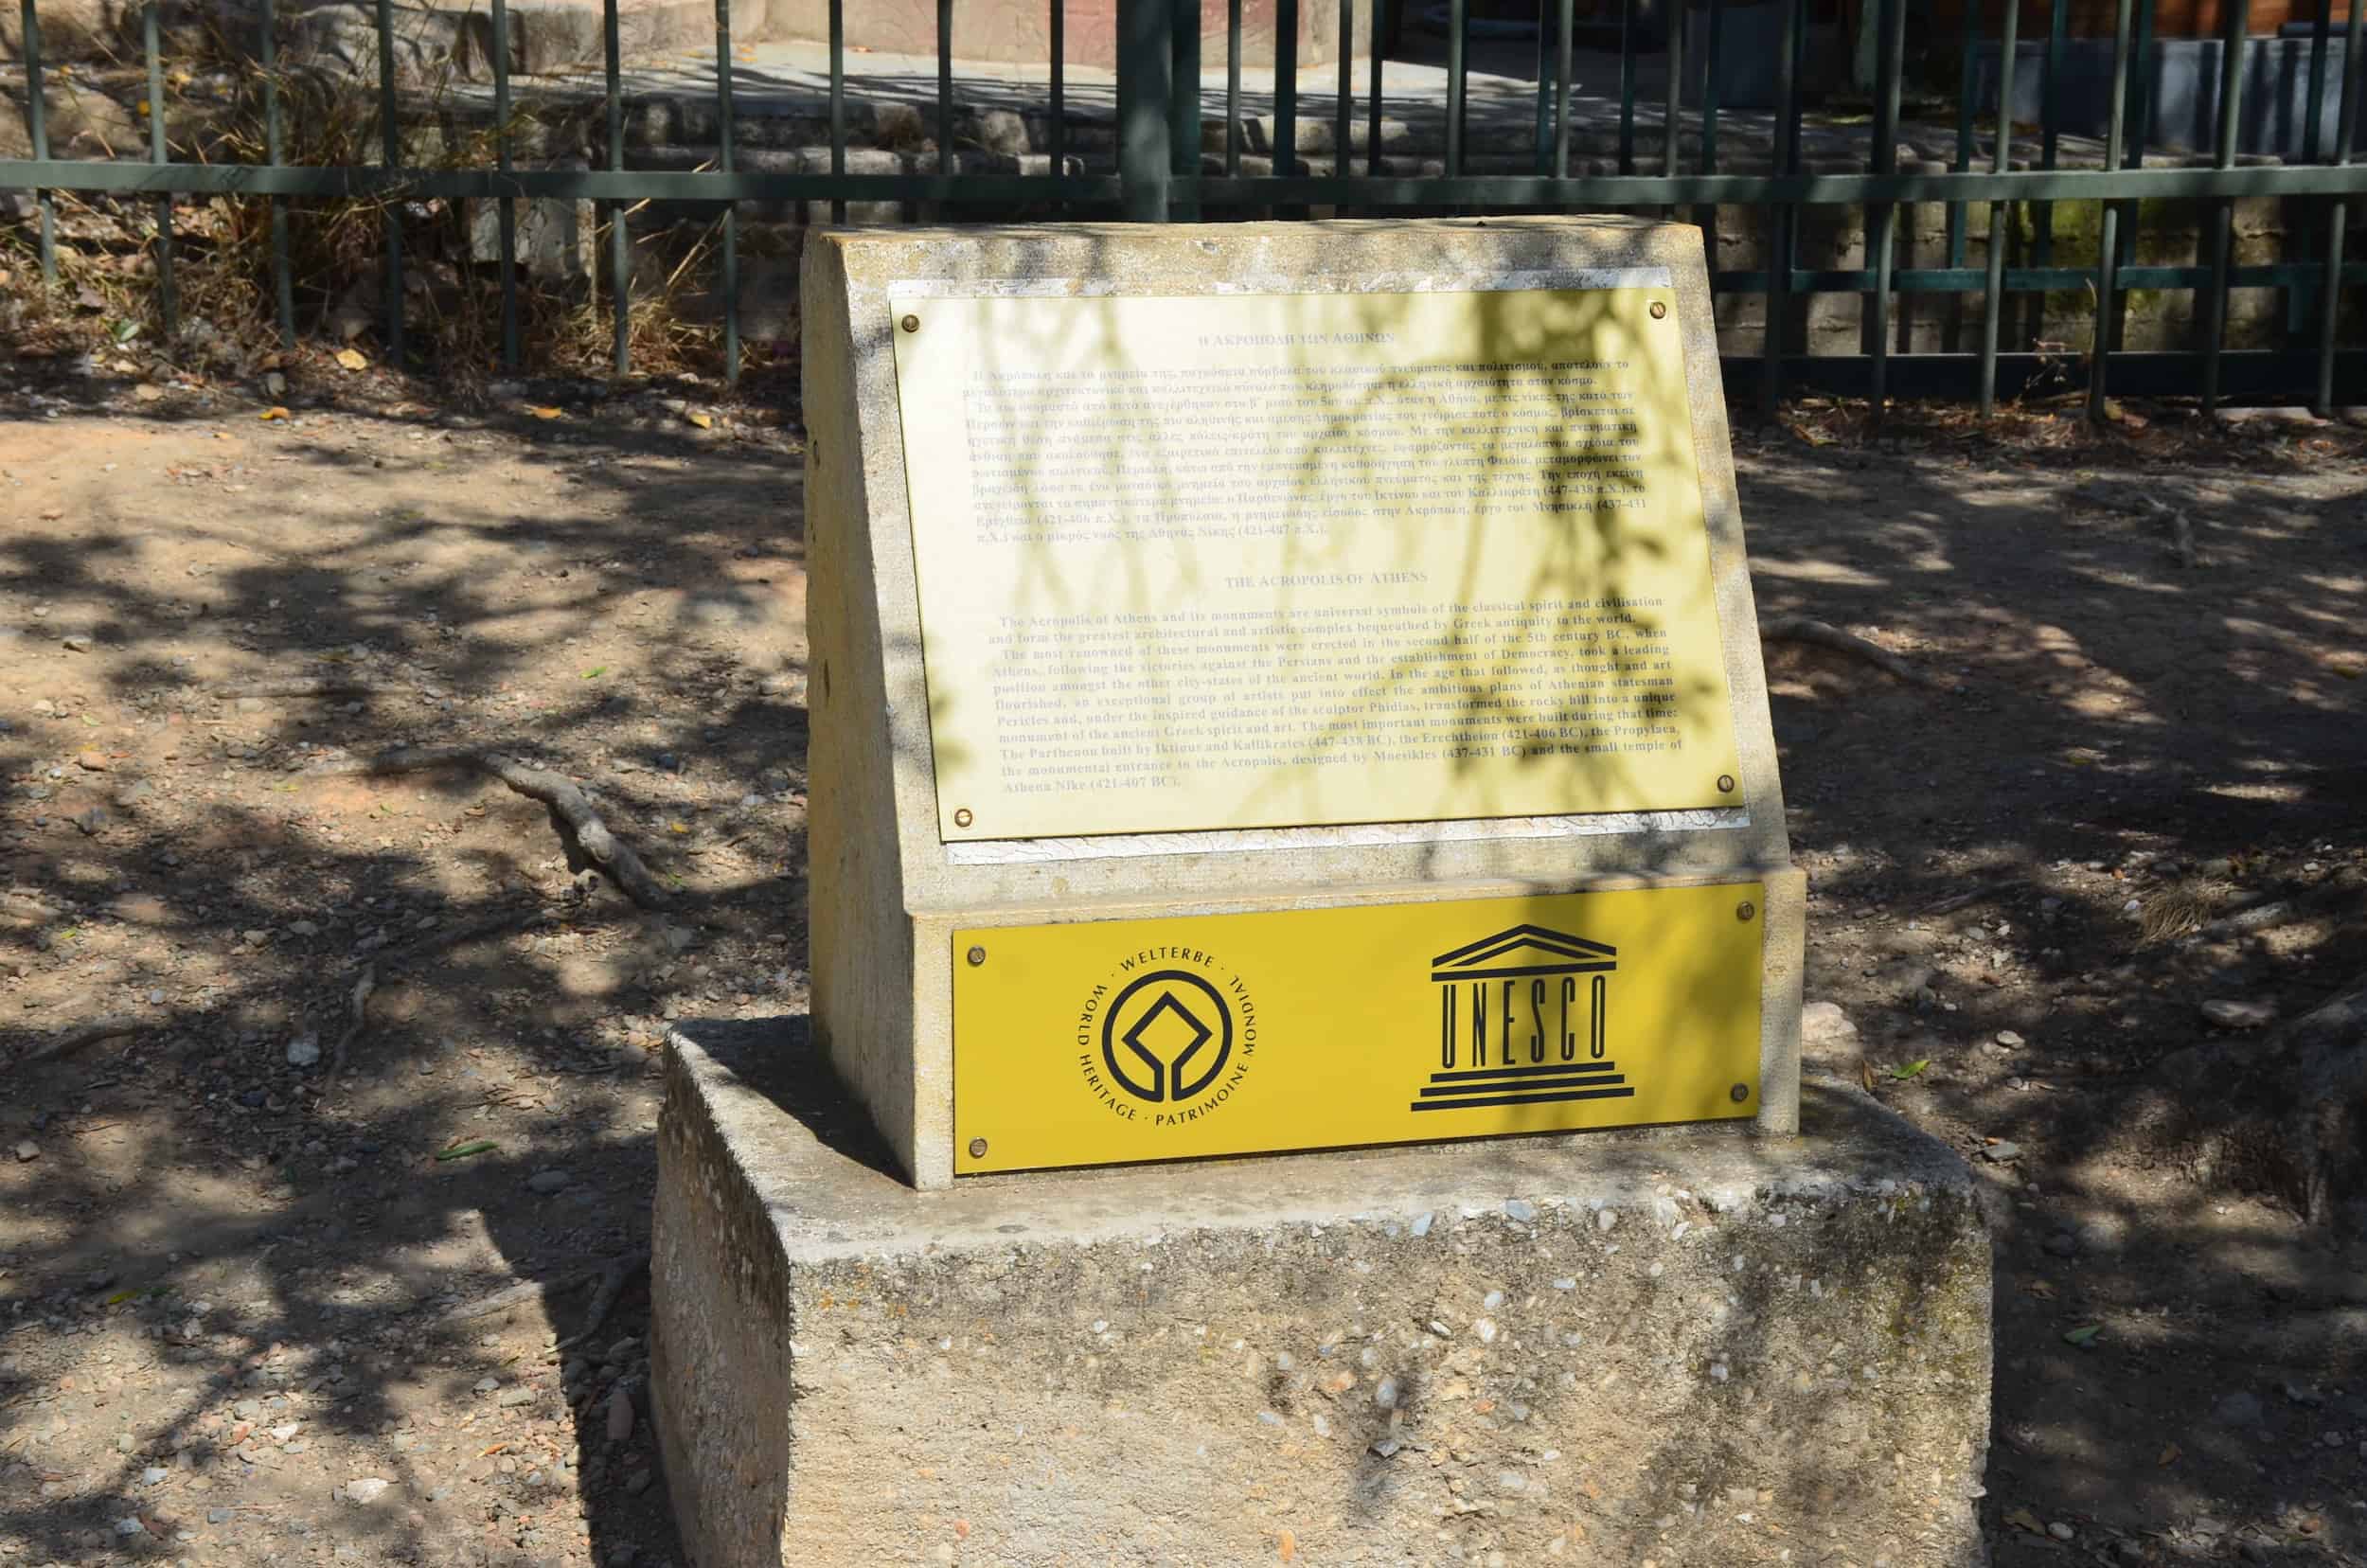 UNESCO Marker at the Acropolis